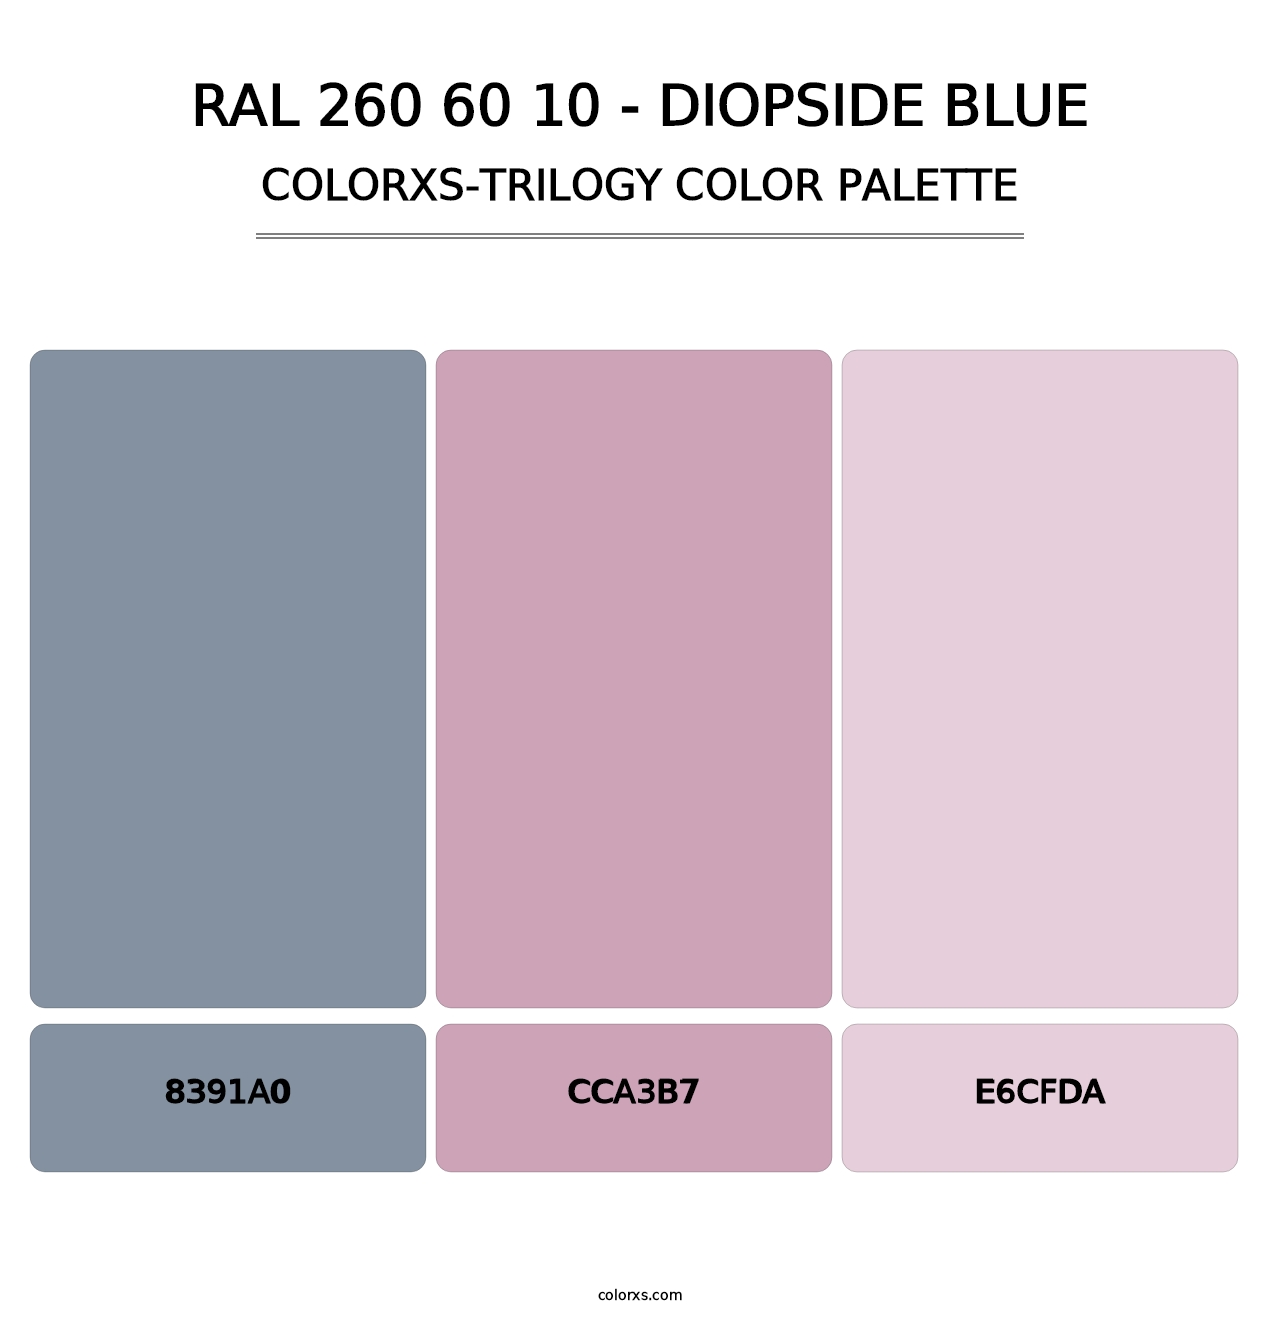 RAL 260 60 10 - Diopside Blue - Colorxs Trilogy Palette